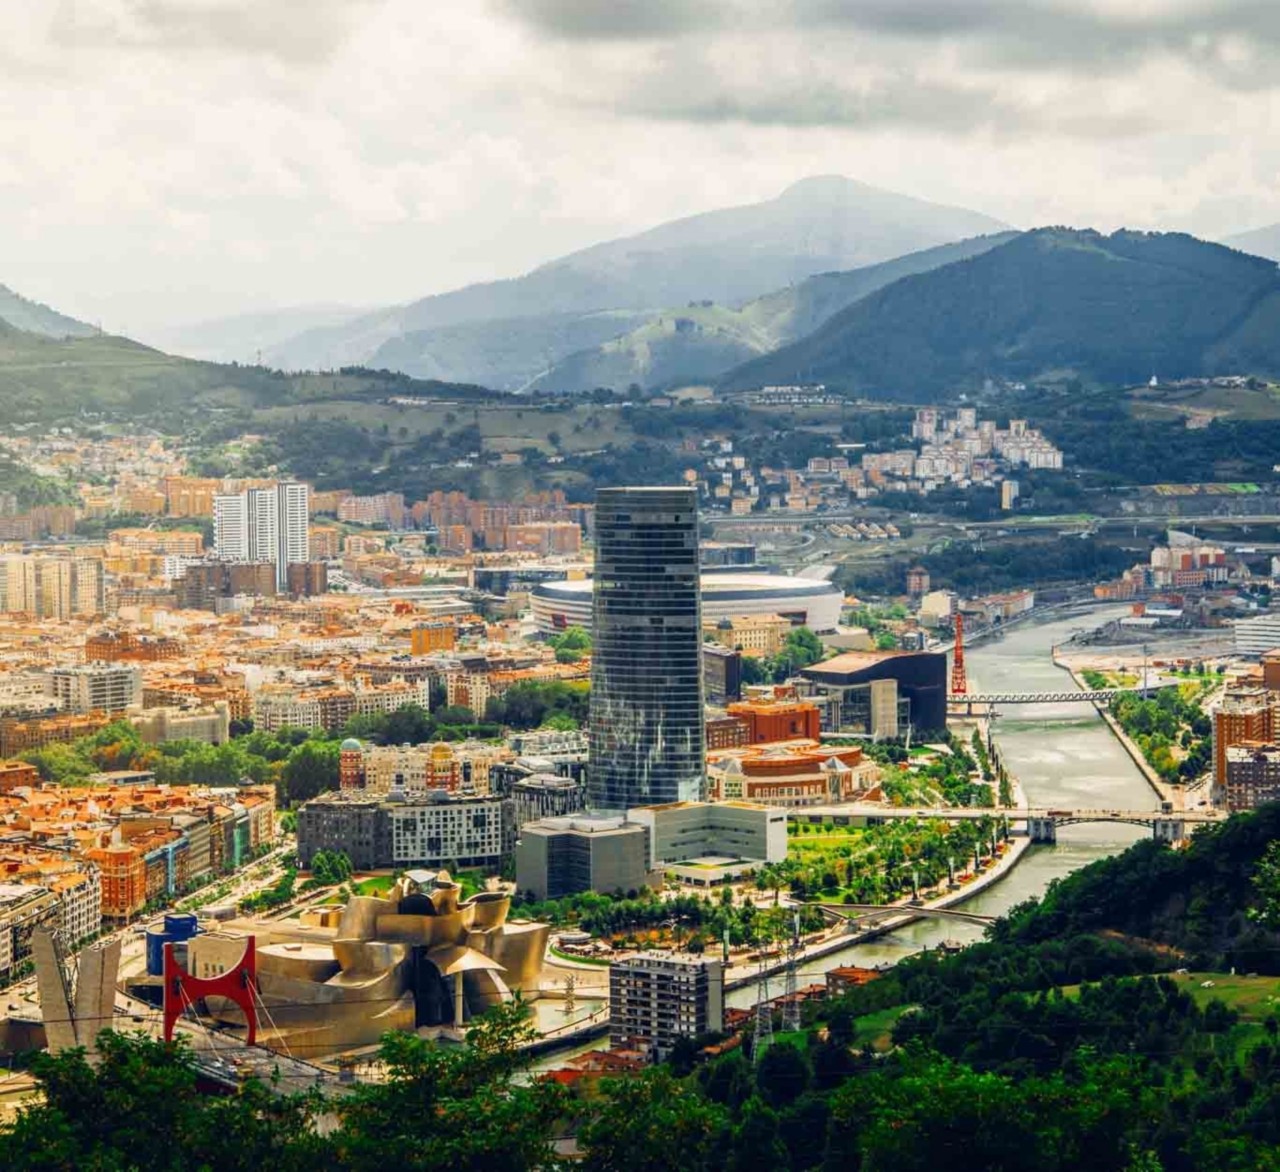 Stadtviertel in Bilbao